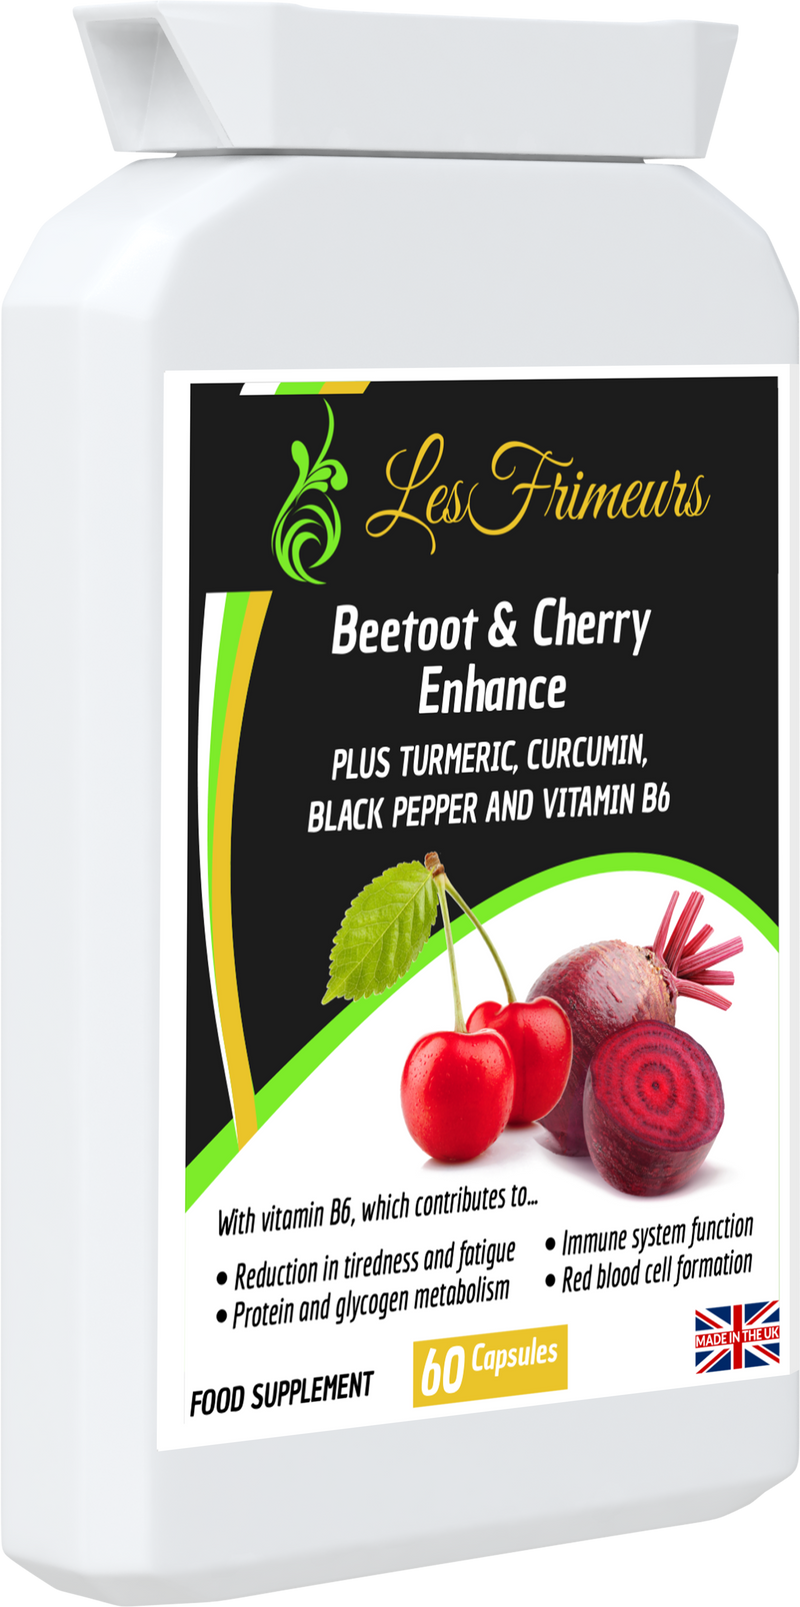 Beetroot & Cherry Enhance